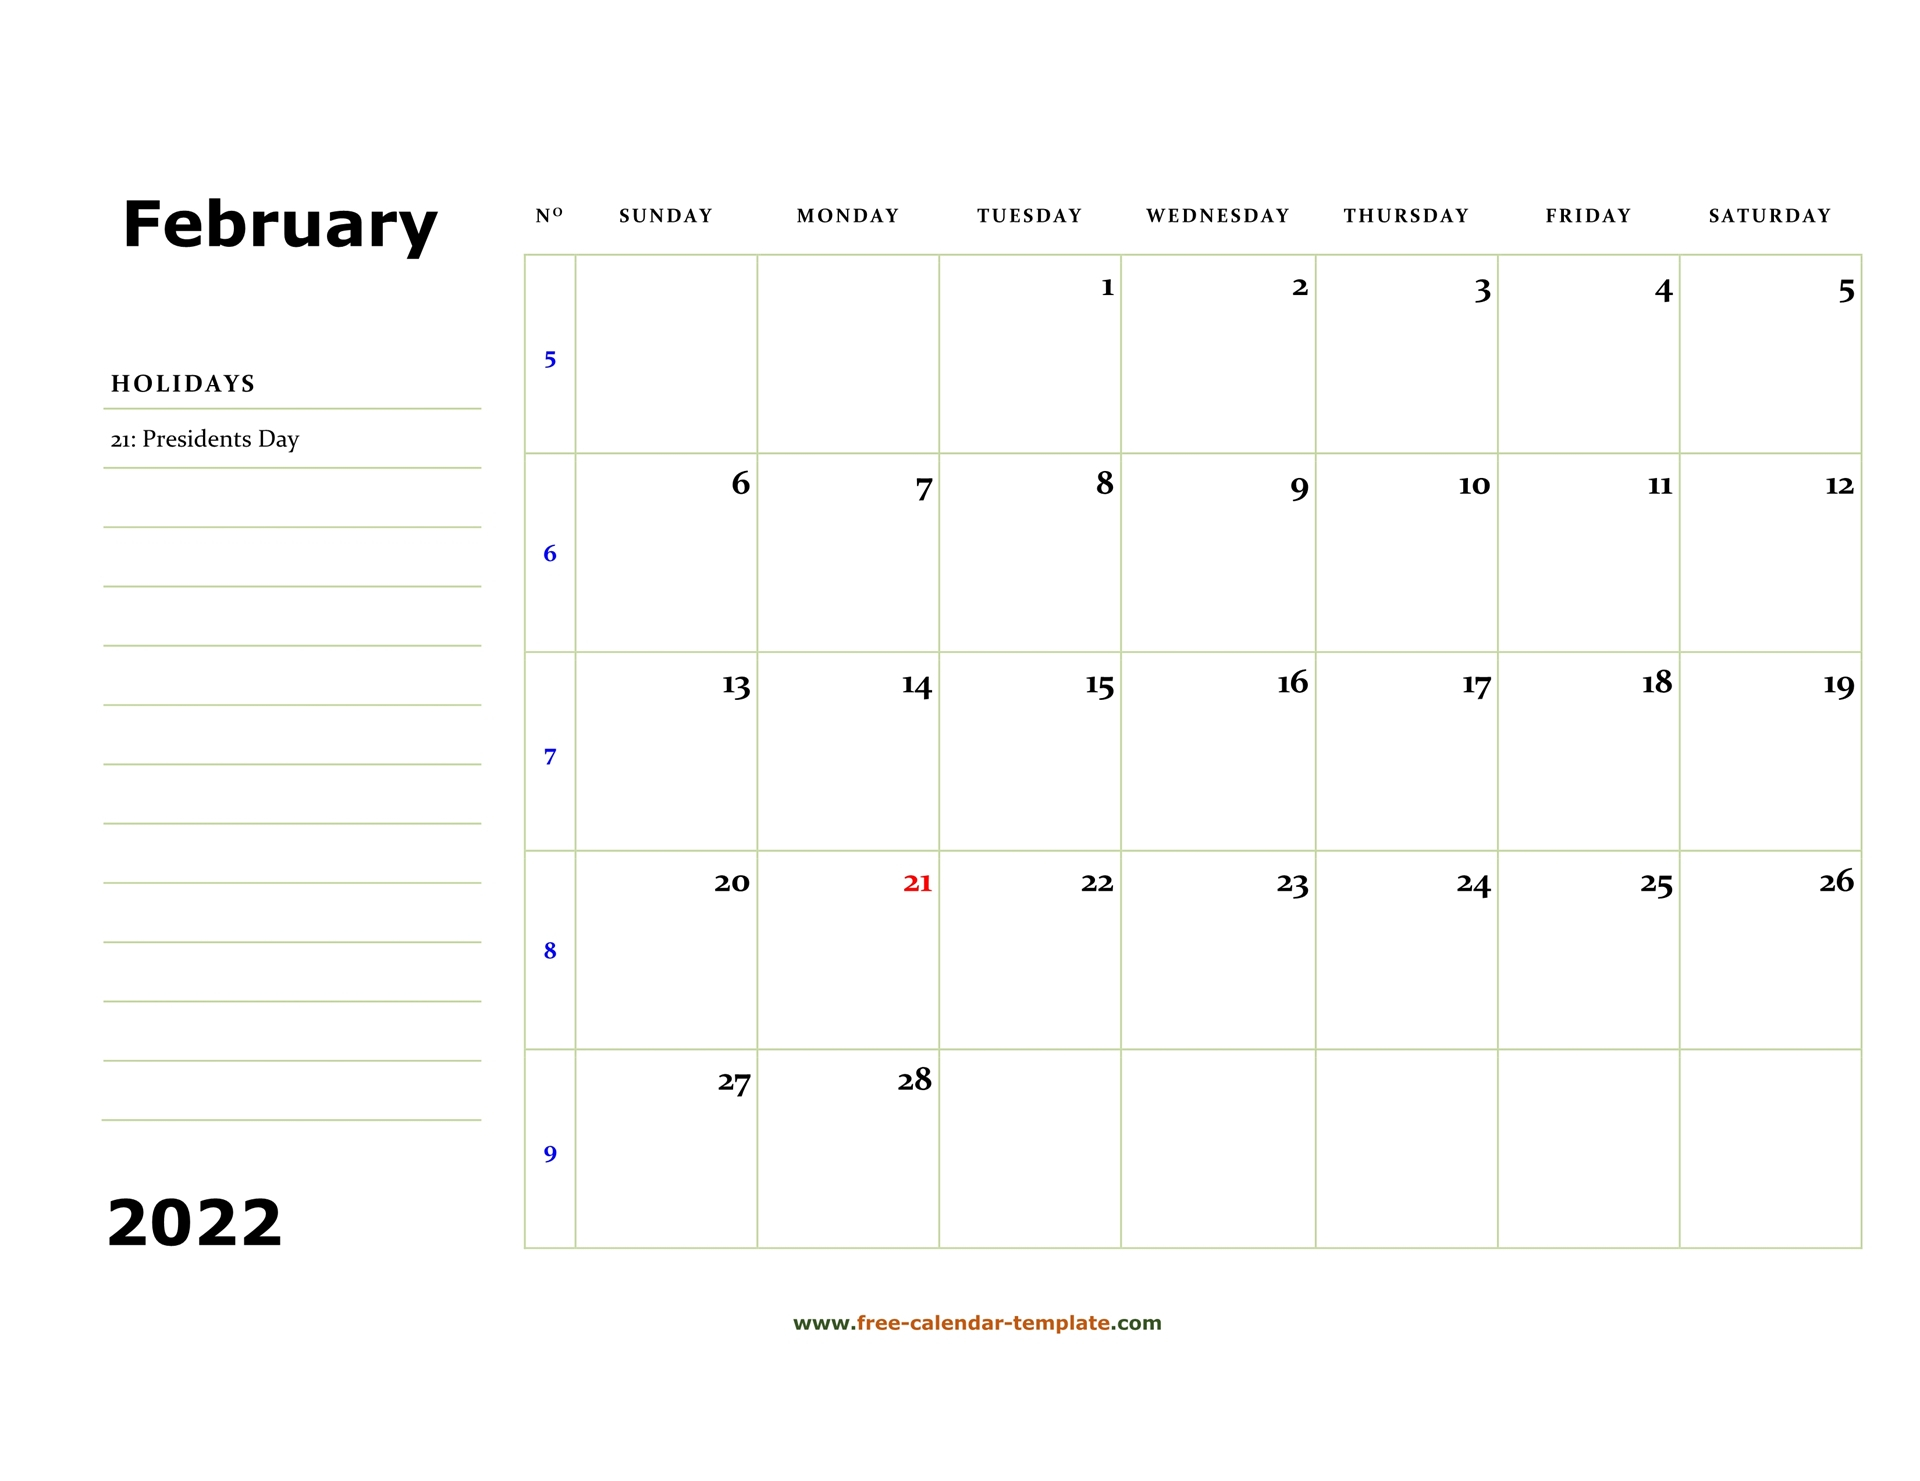 February 2022 Free Calendar Tempplate | Free-Calendar-Template